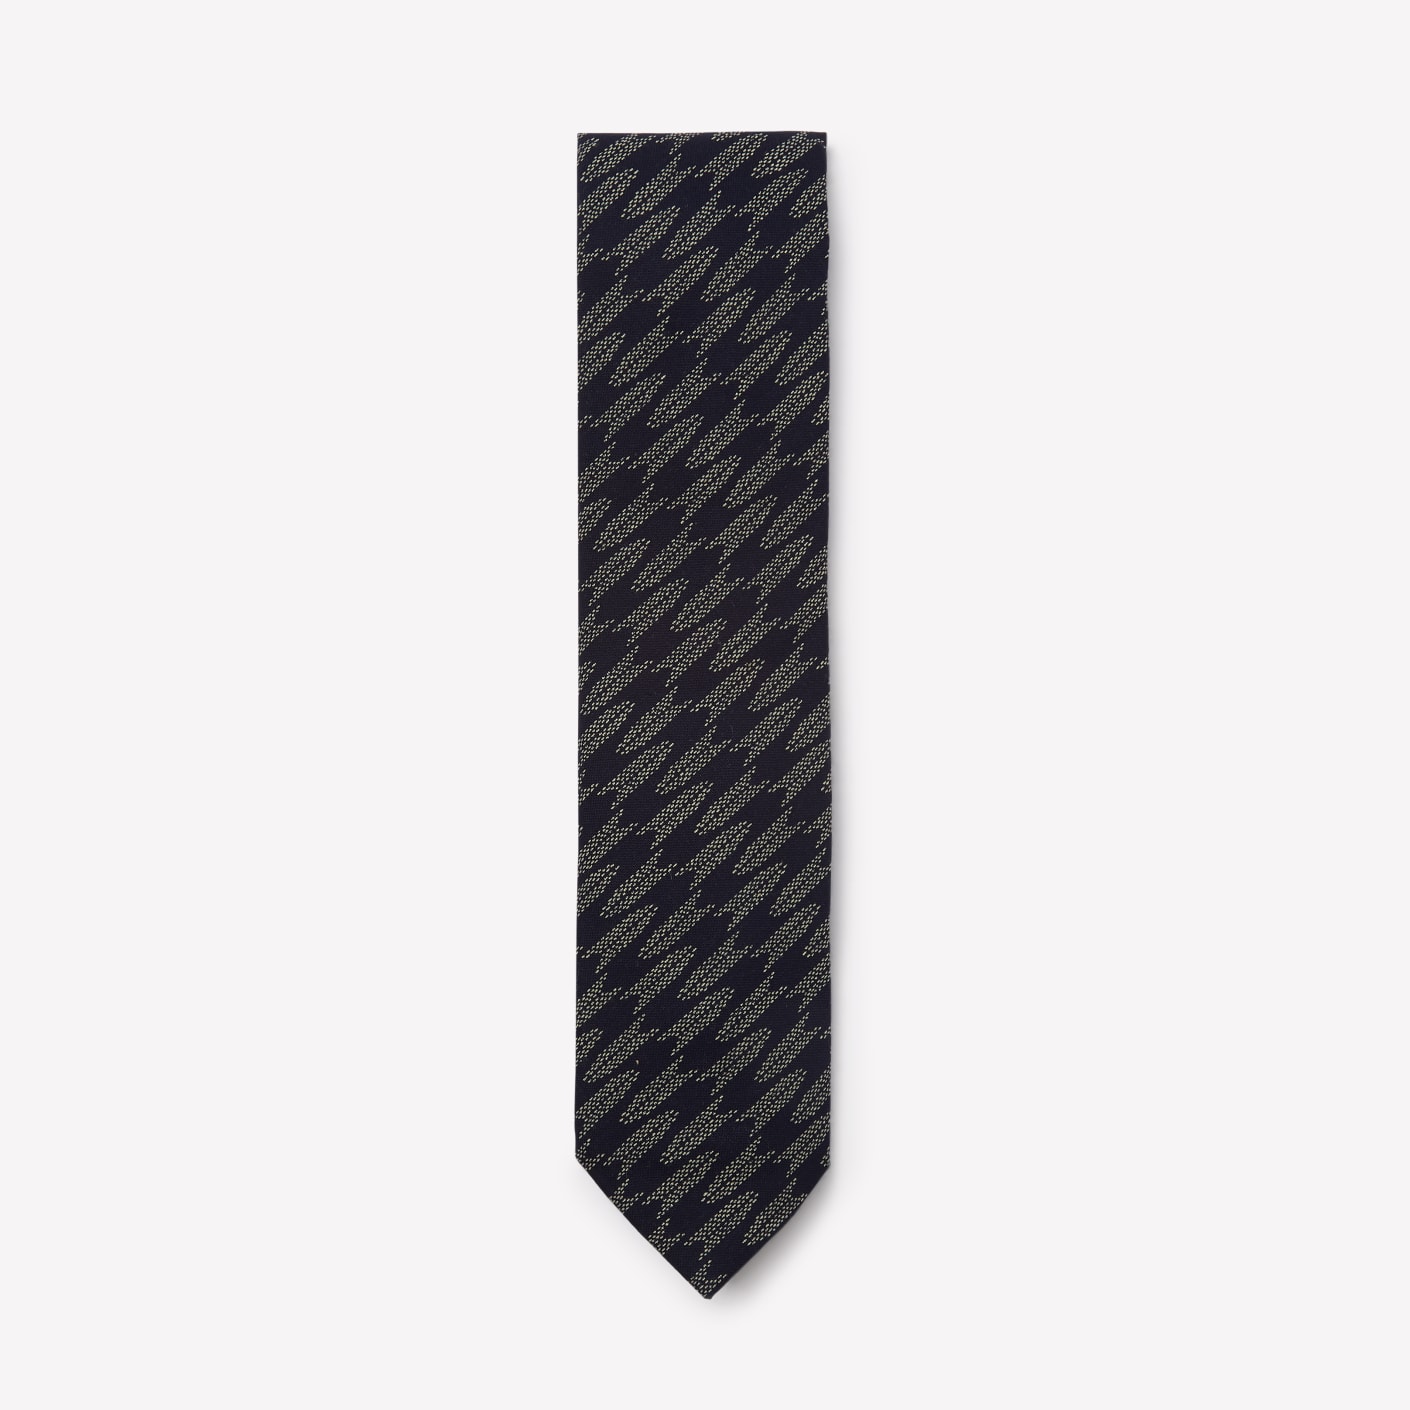 Neck & Tie Co., Matrix Necktie